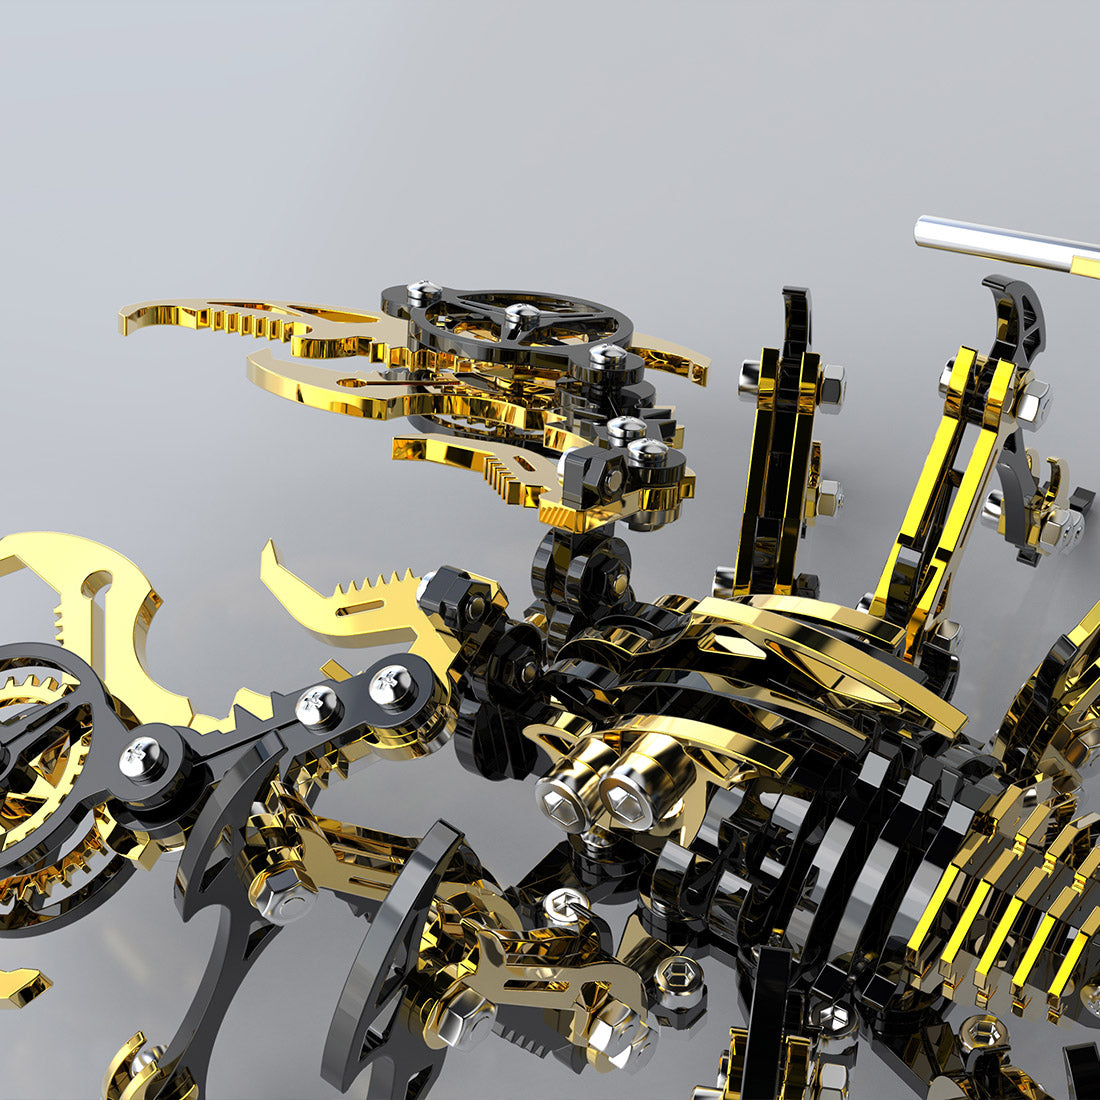 Black & Golden 3D Stainless Steek DIY Scorpion Metal Model Kits - stirlingkit